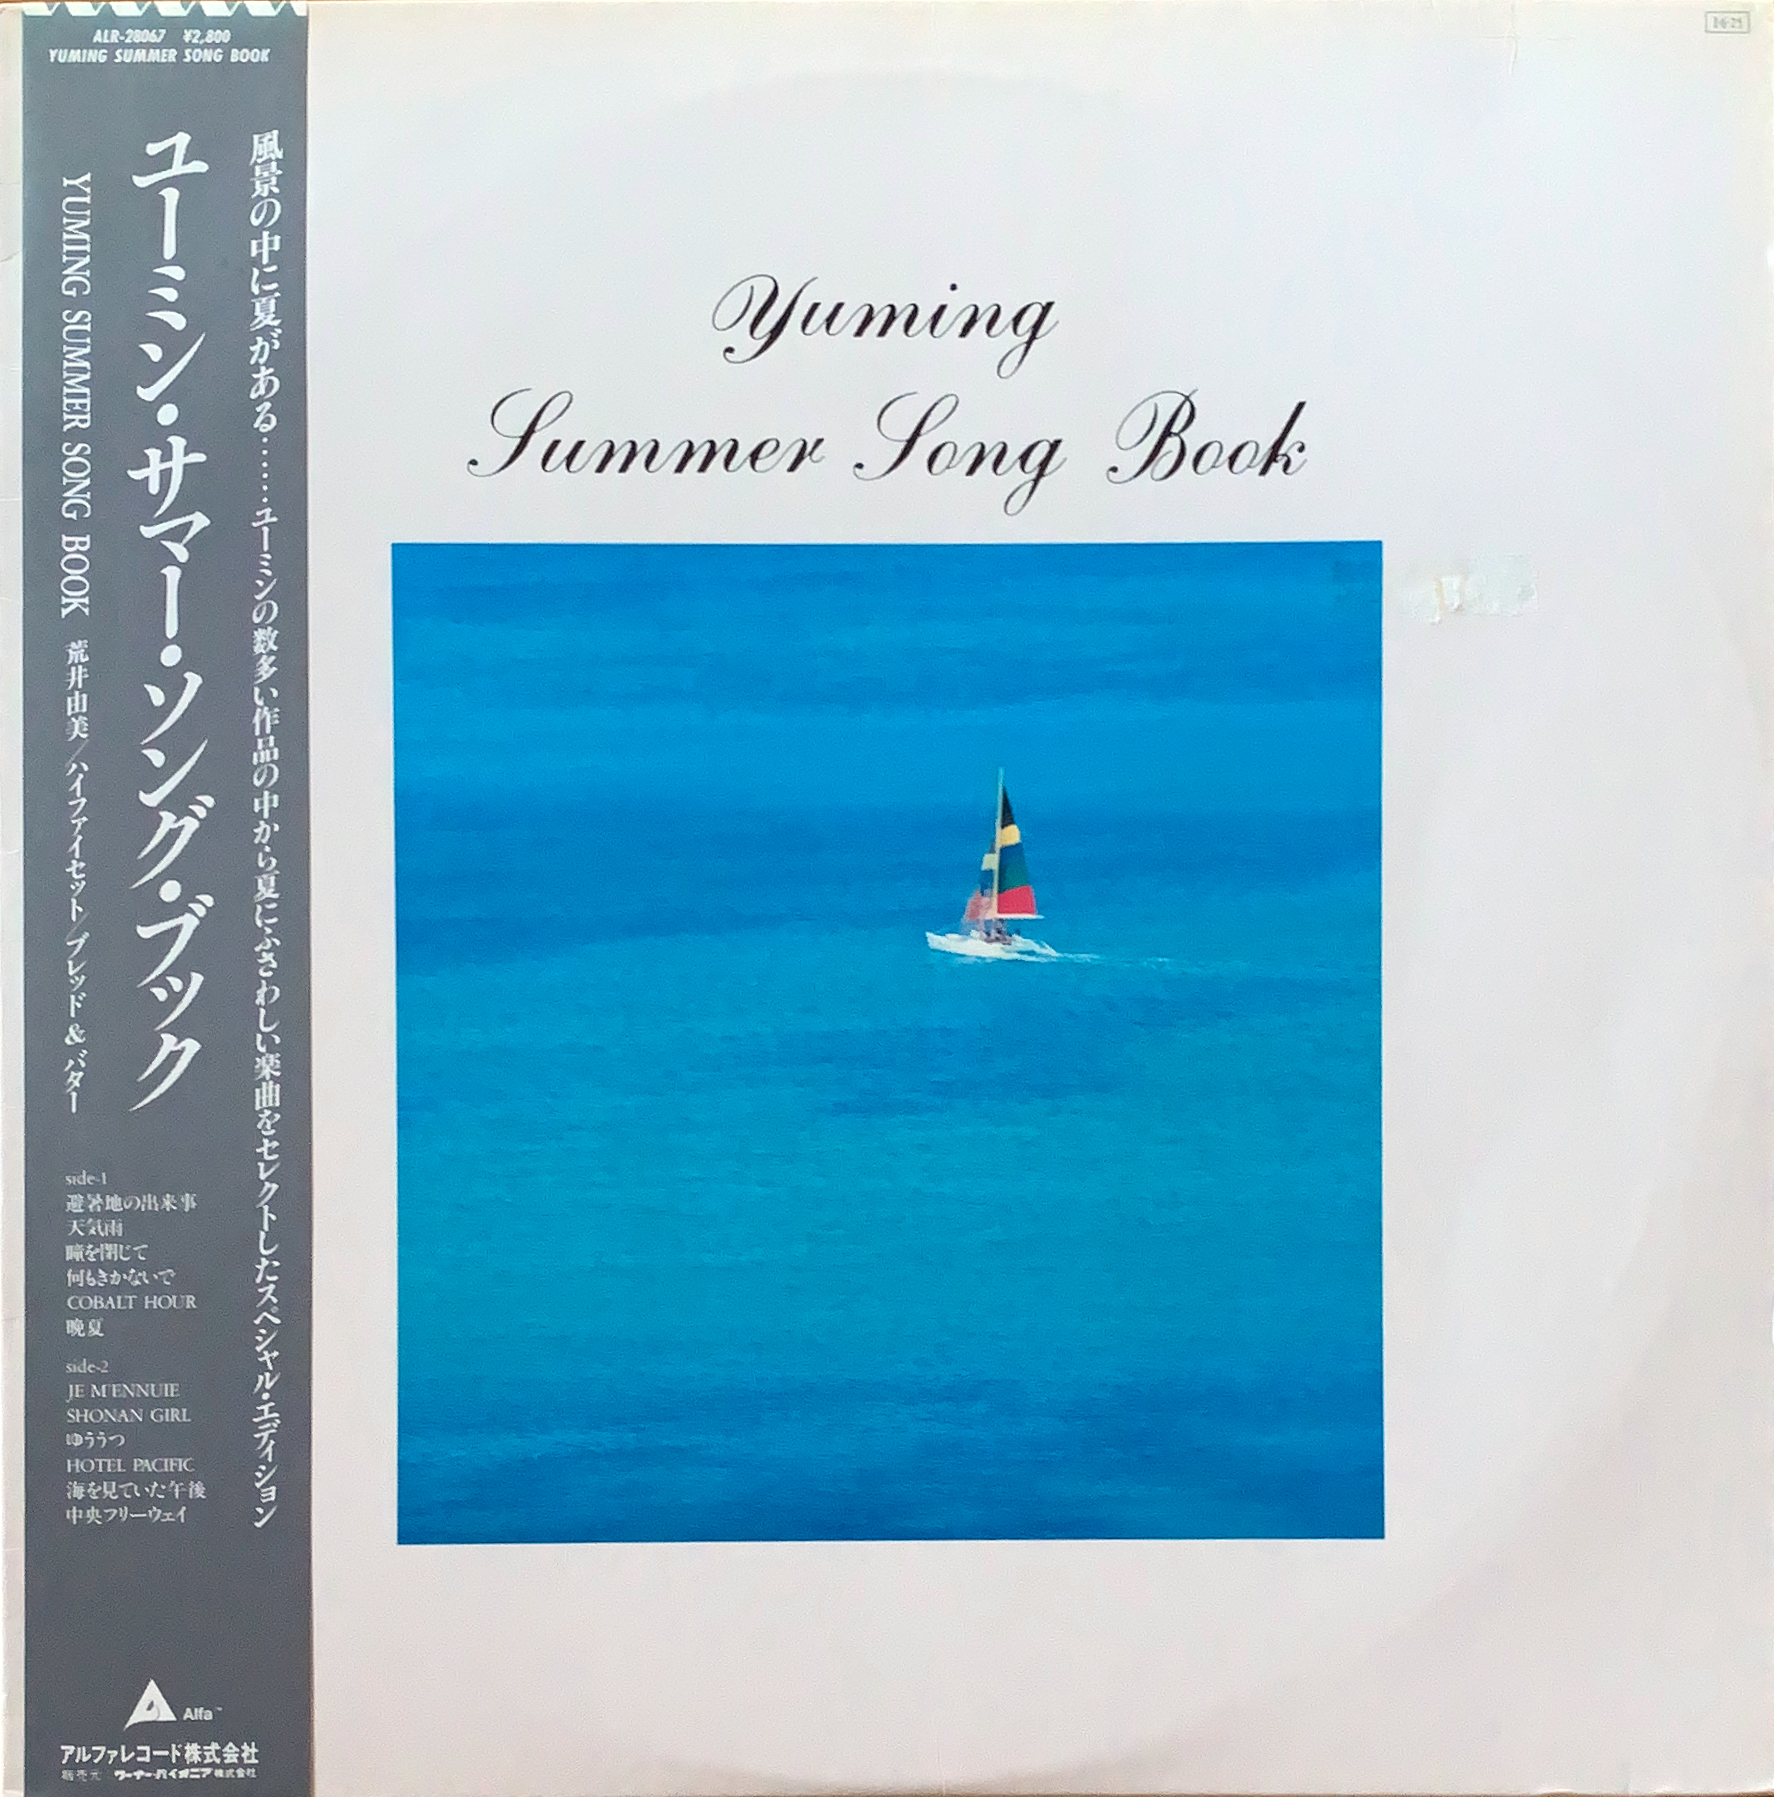 Yuming Summer Song Book [LP] - bar chiba Music Store